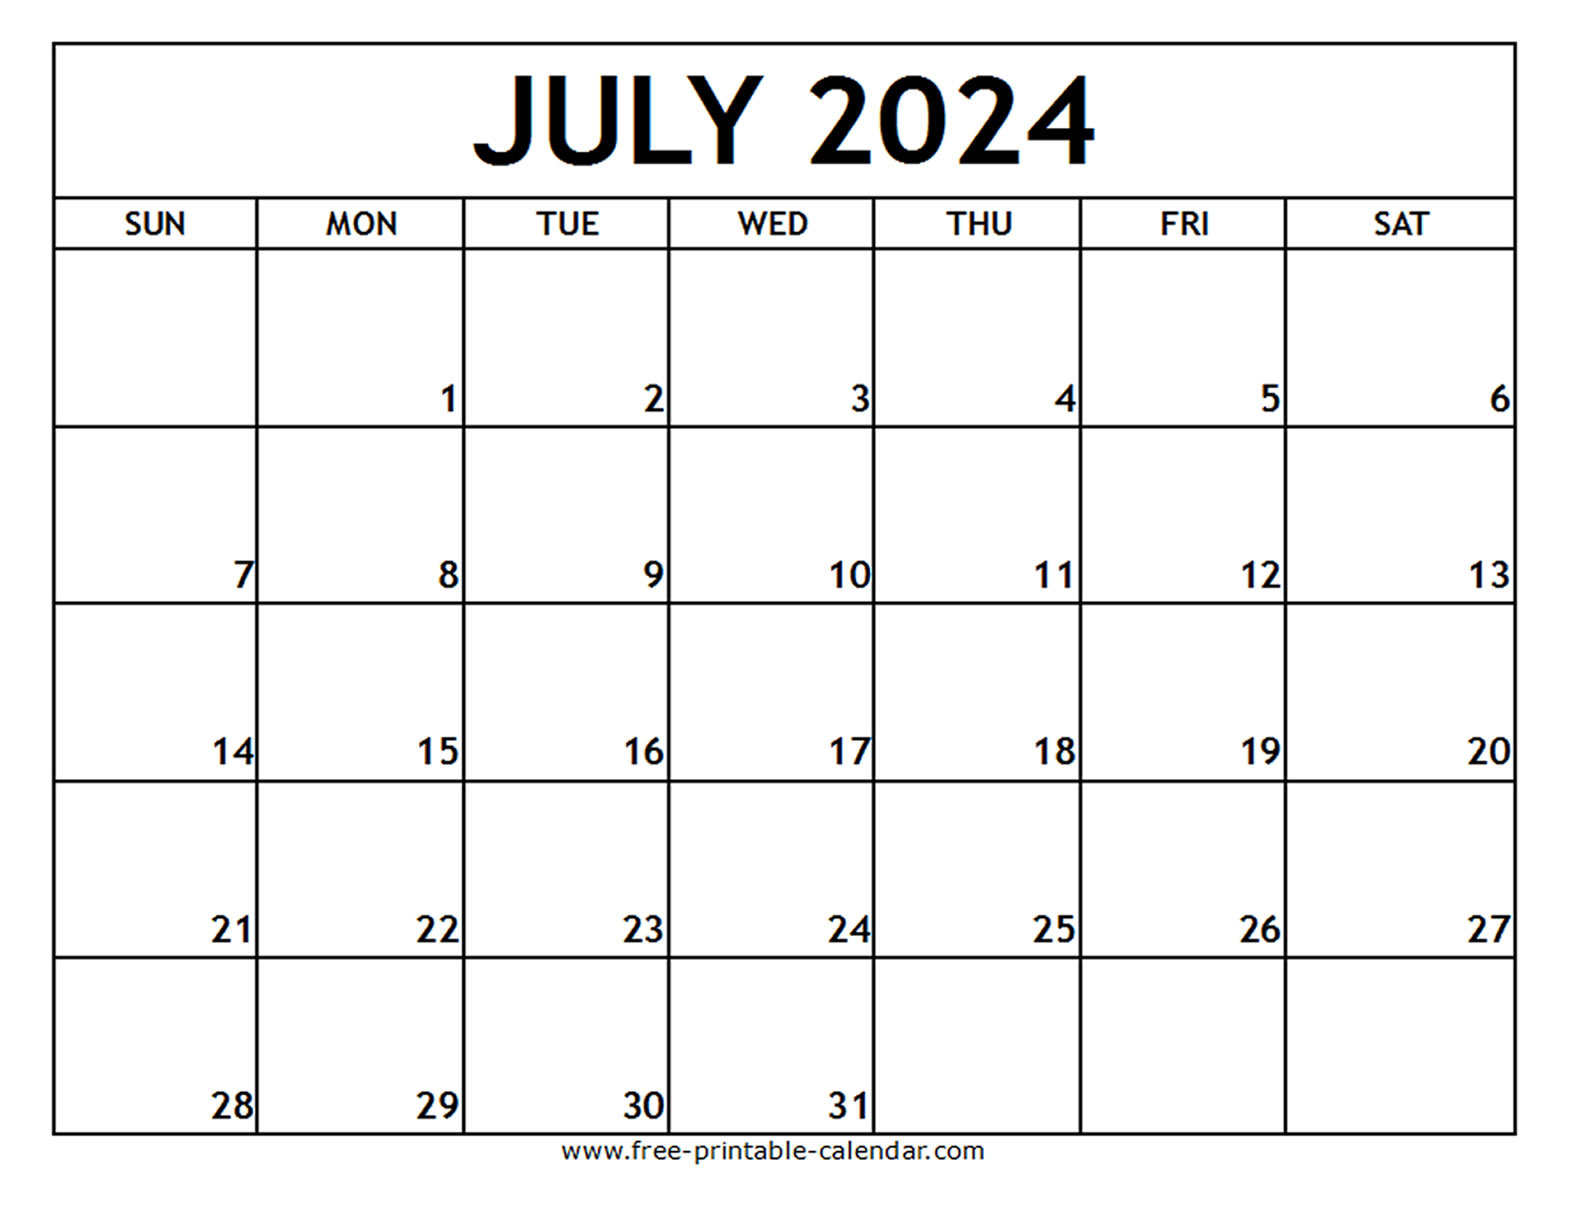 July 2024 Printable Calendar - Free-Printable-Calendar for Printable July 2024 Calendar Free